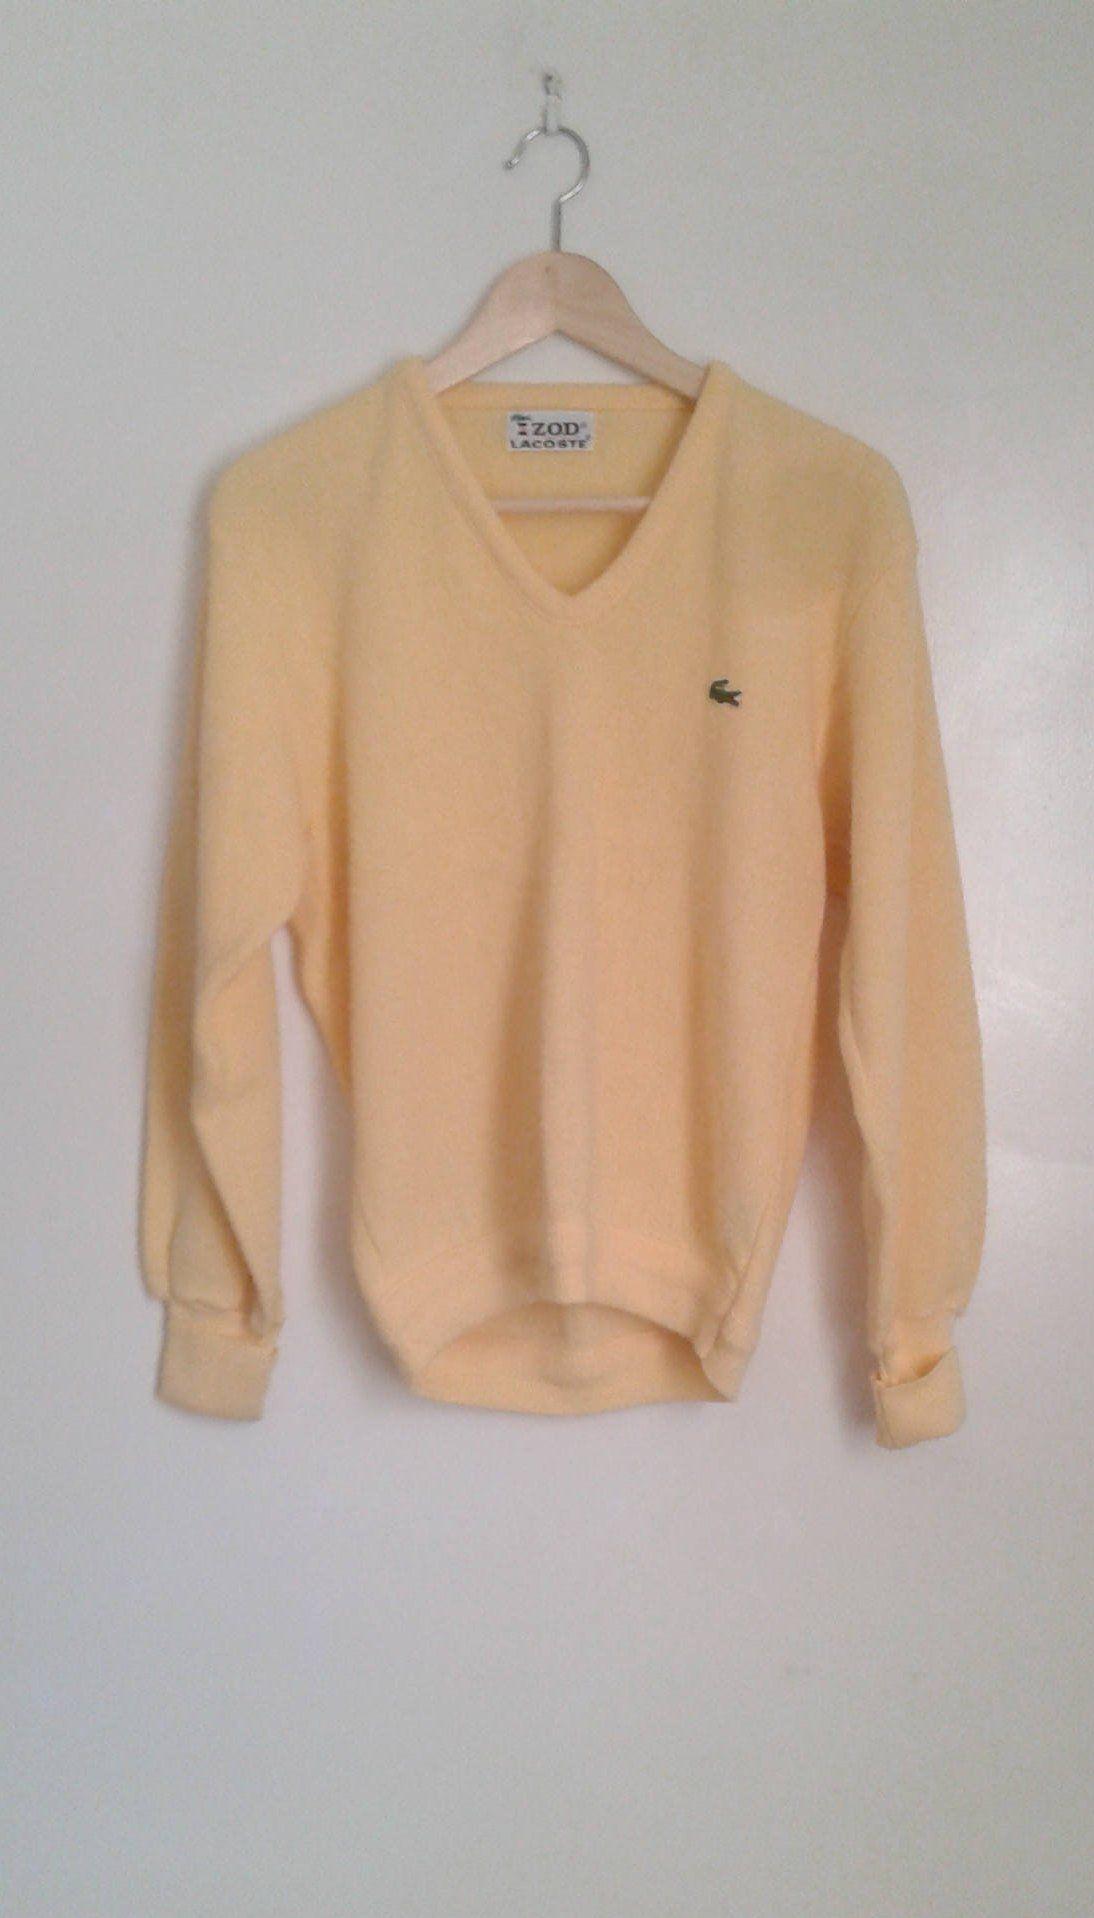 Izod Crocodile Logo - Vintage 1980's Izod Lacoste Pale Yellow V-neck Tennis Sweater ...